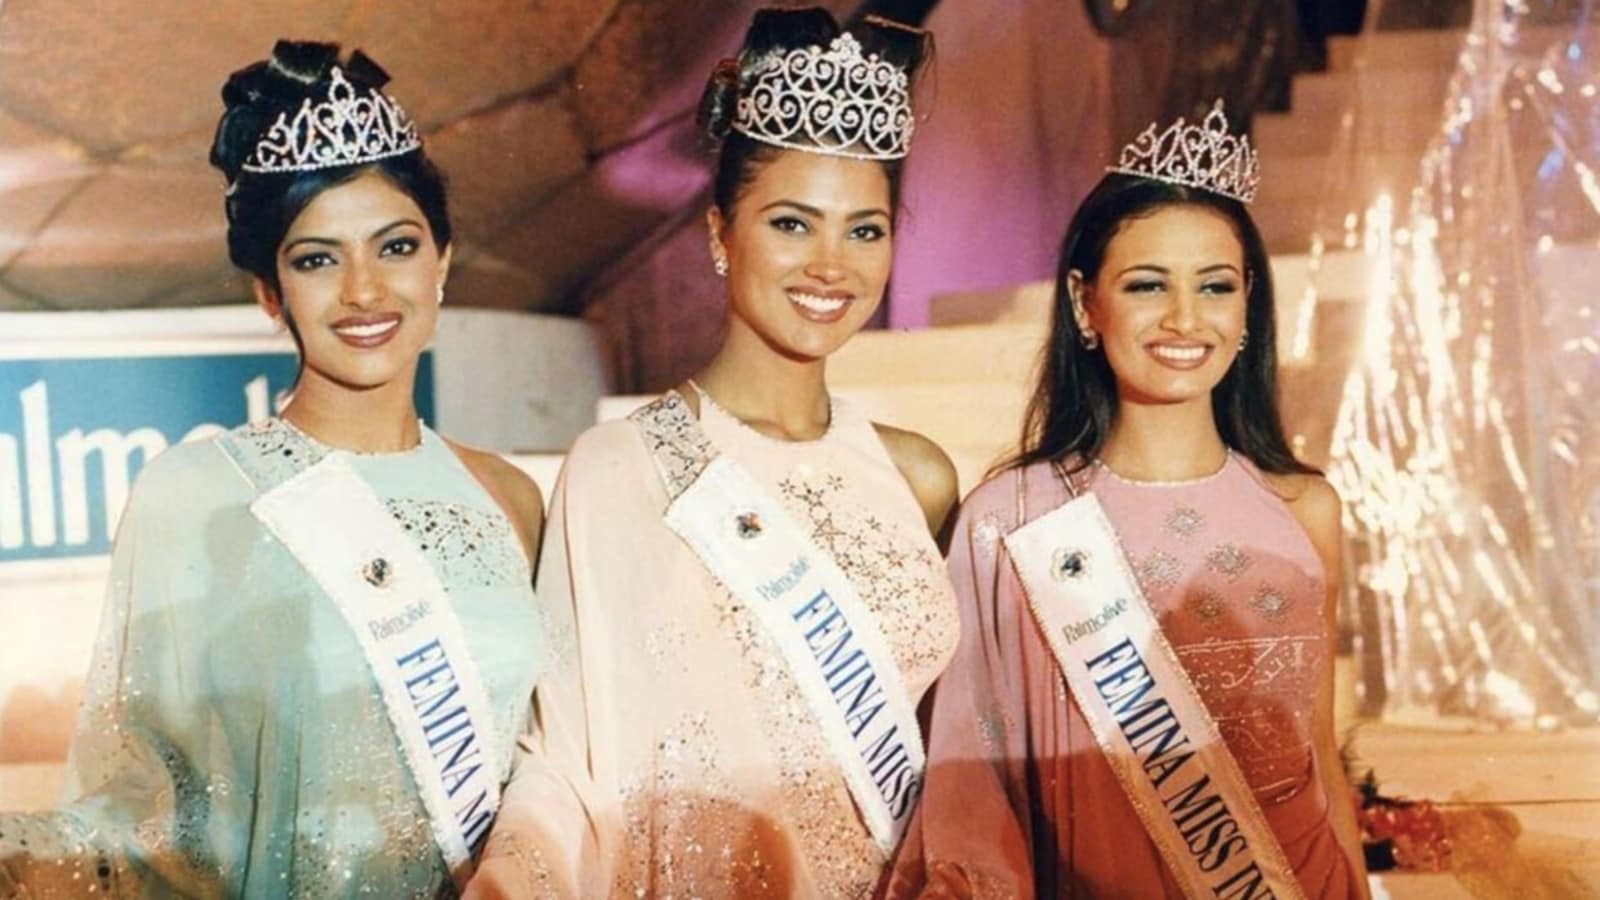 When Priyanka Chopra said she and Dia Mirza were 'babes' during Miss India, would call Lara Dutta 'mom'